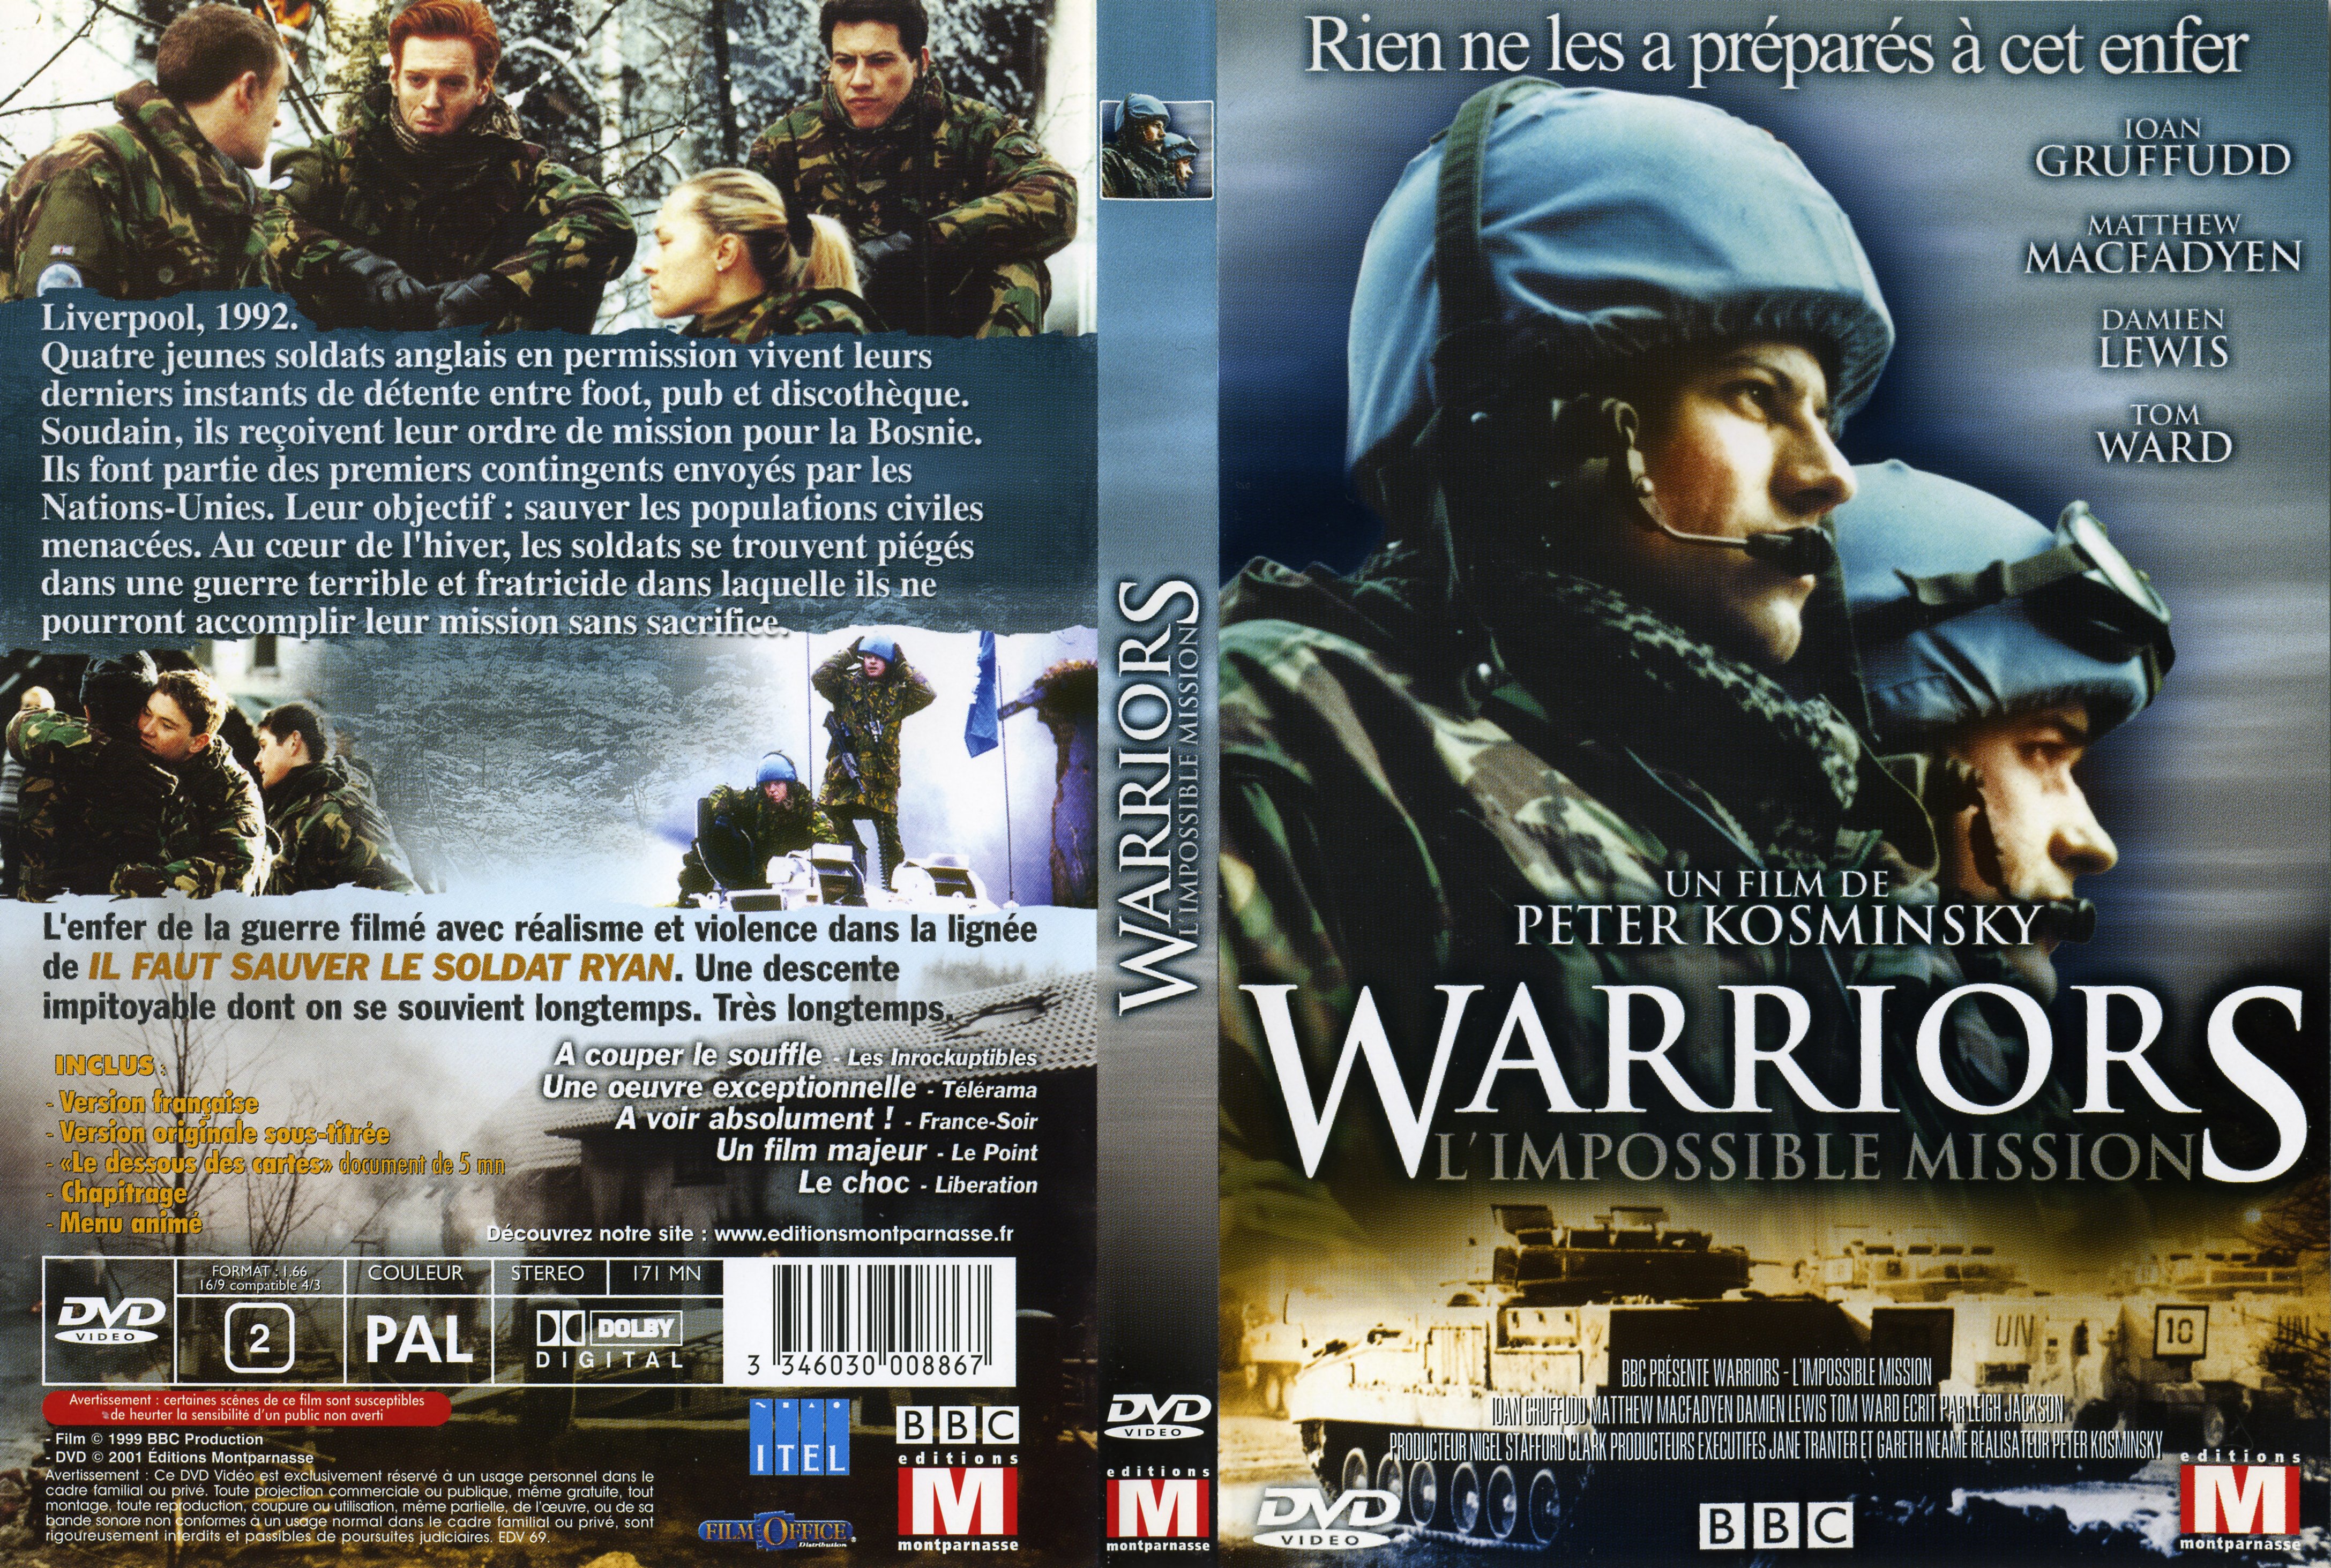 Jaquette DVD Warriors l